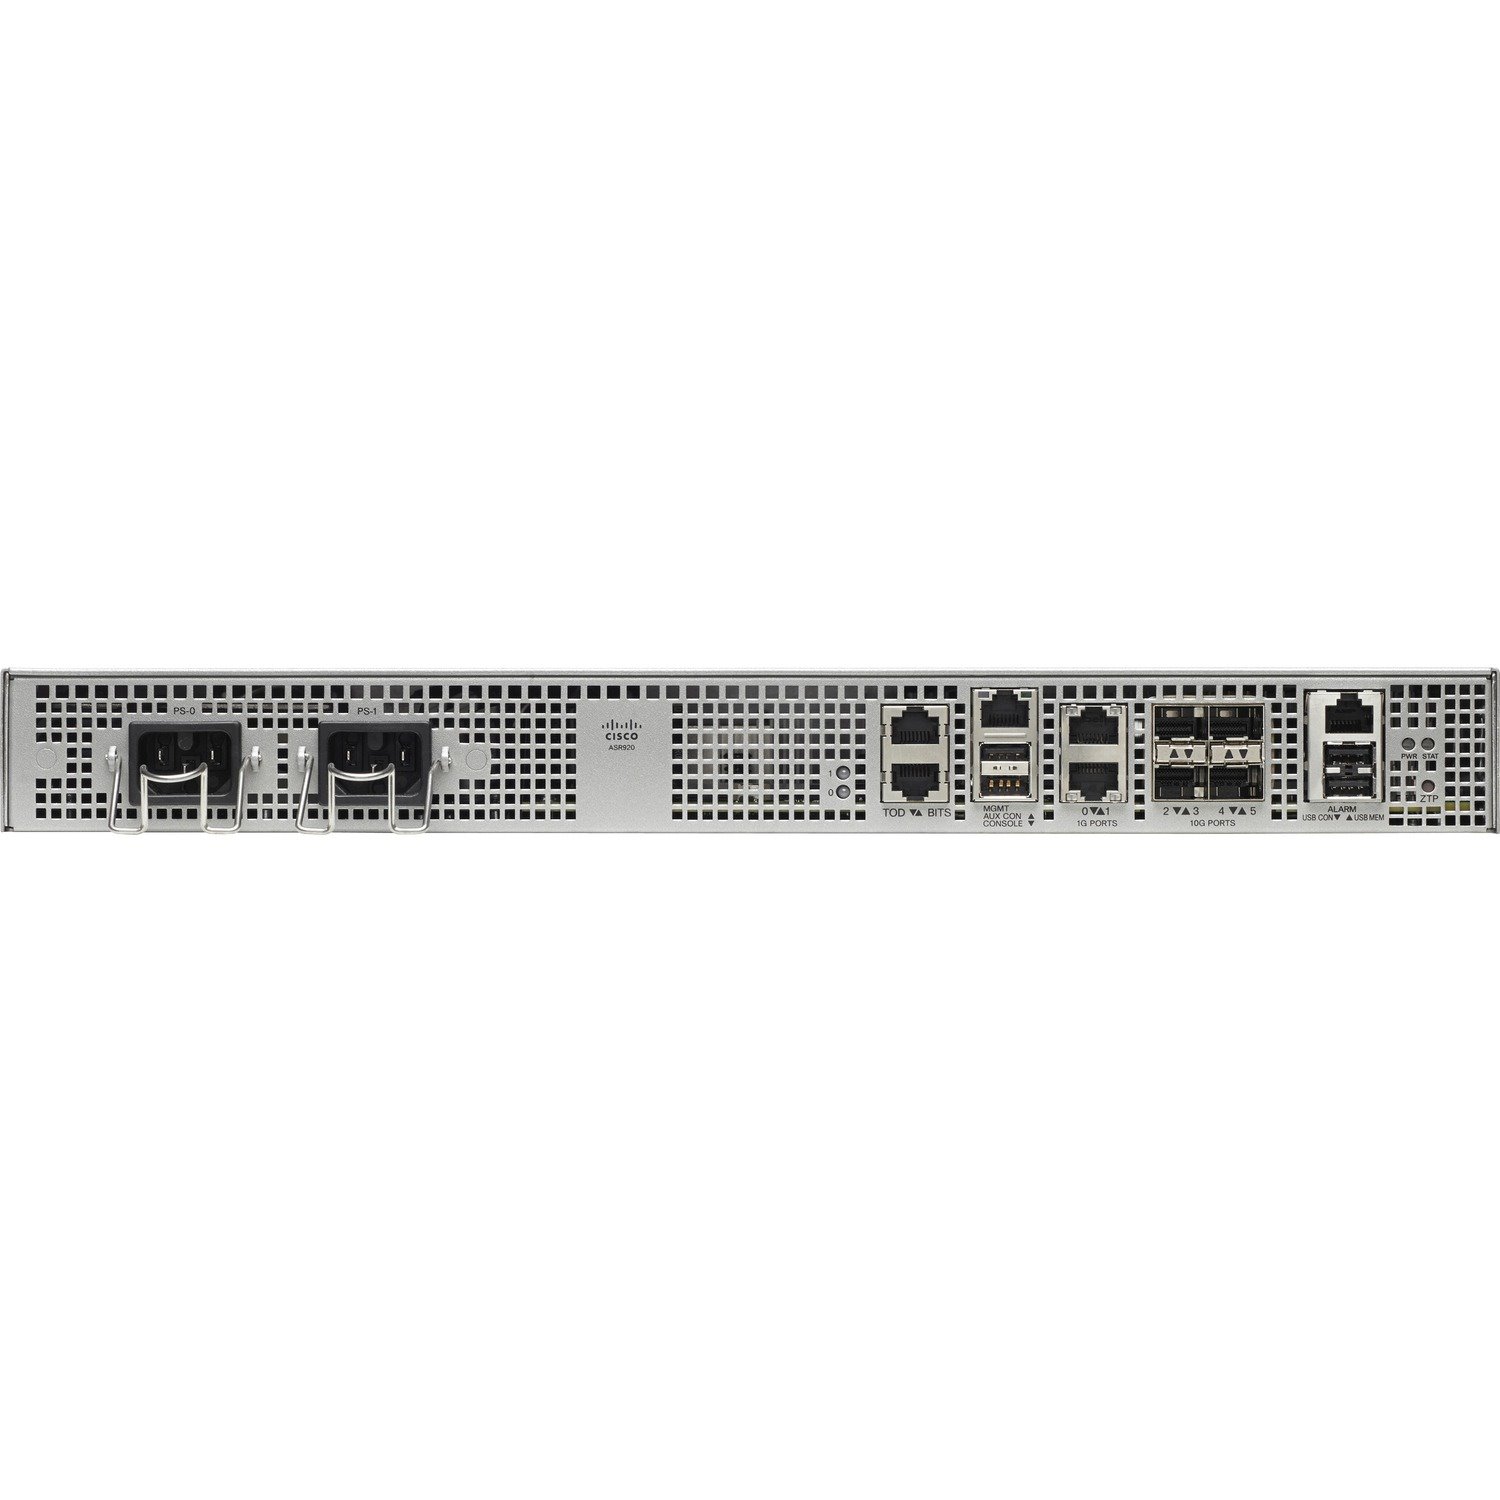 Cisco ASR 920 ASR-920-4SZ-A Router - Refurbished